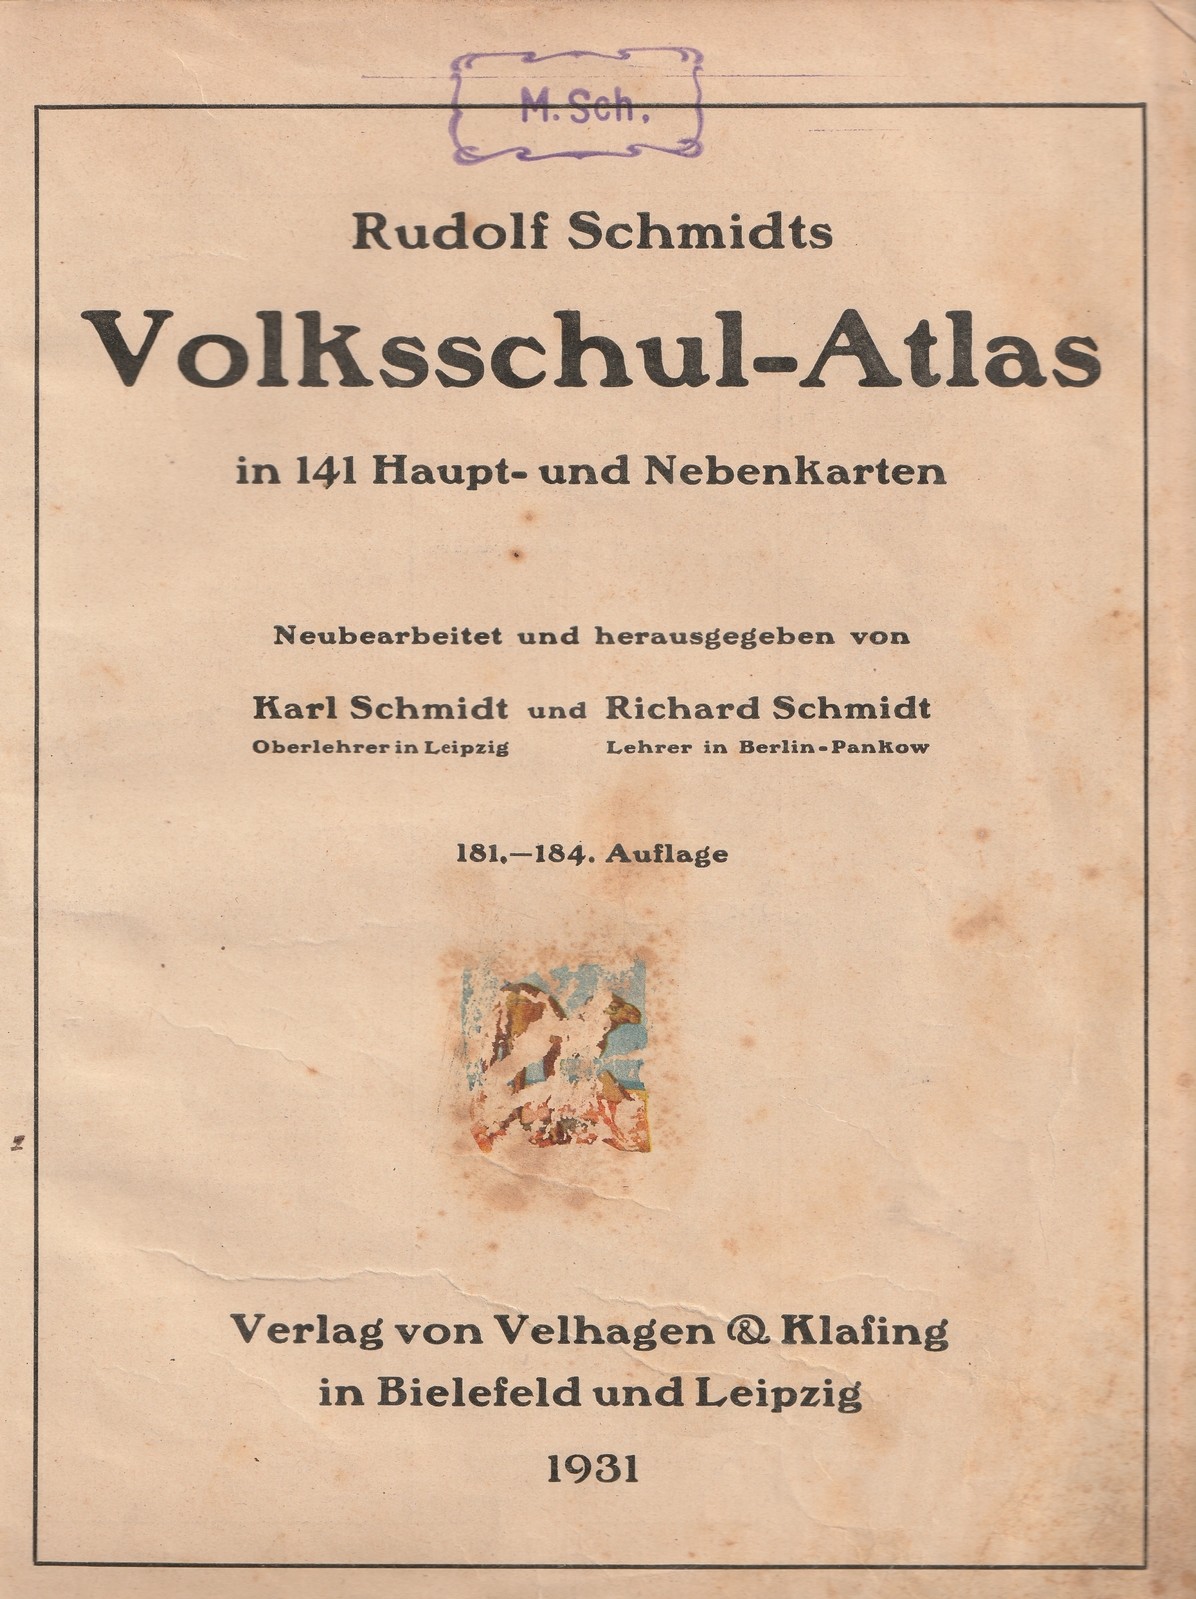 Rudolf Schmidts Volksschul-Atlas (Kulturverein Guntersblum CC BY-NC-SA)